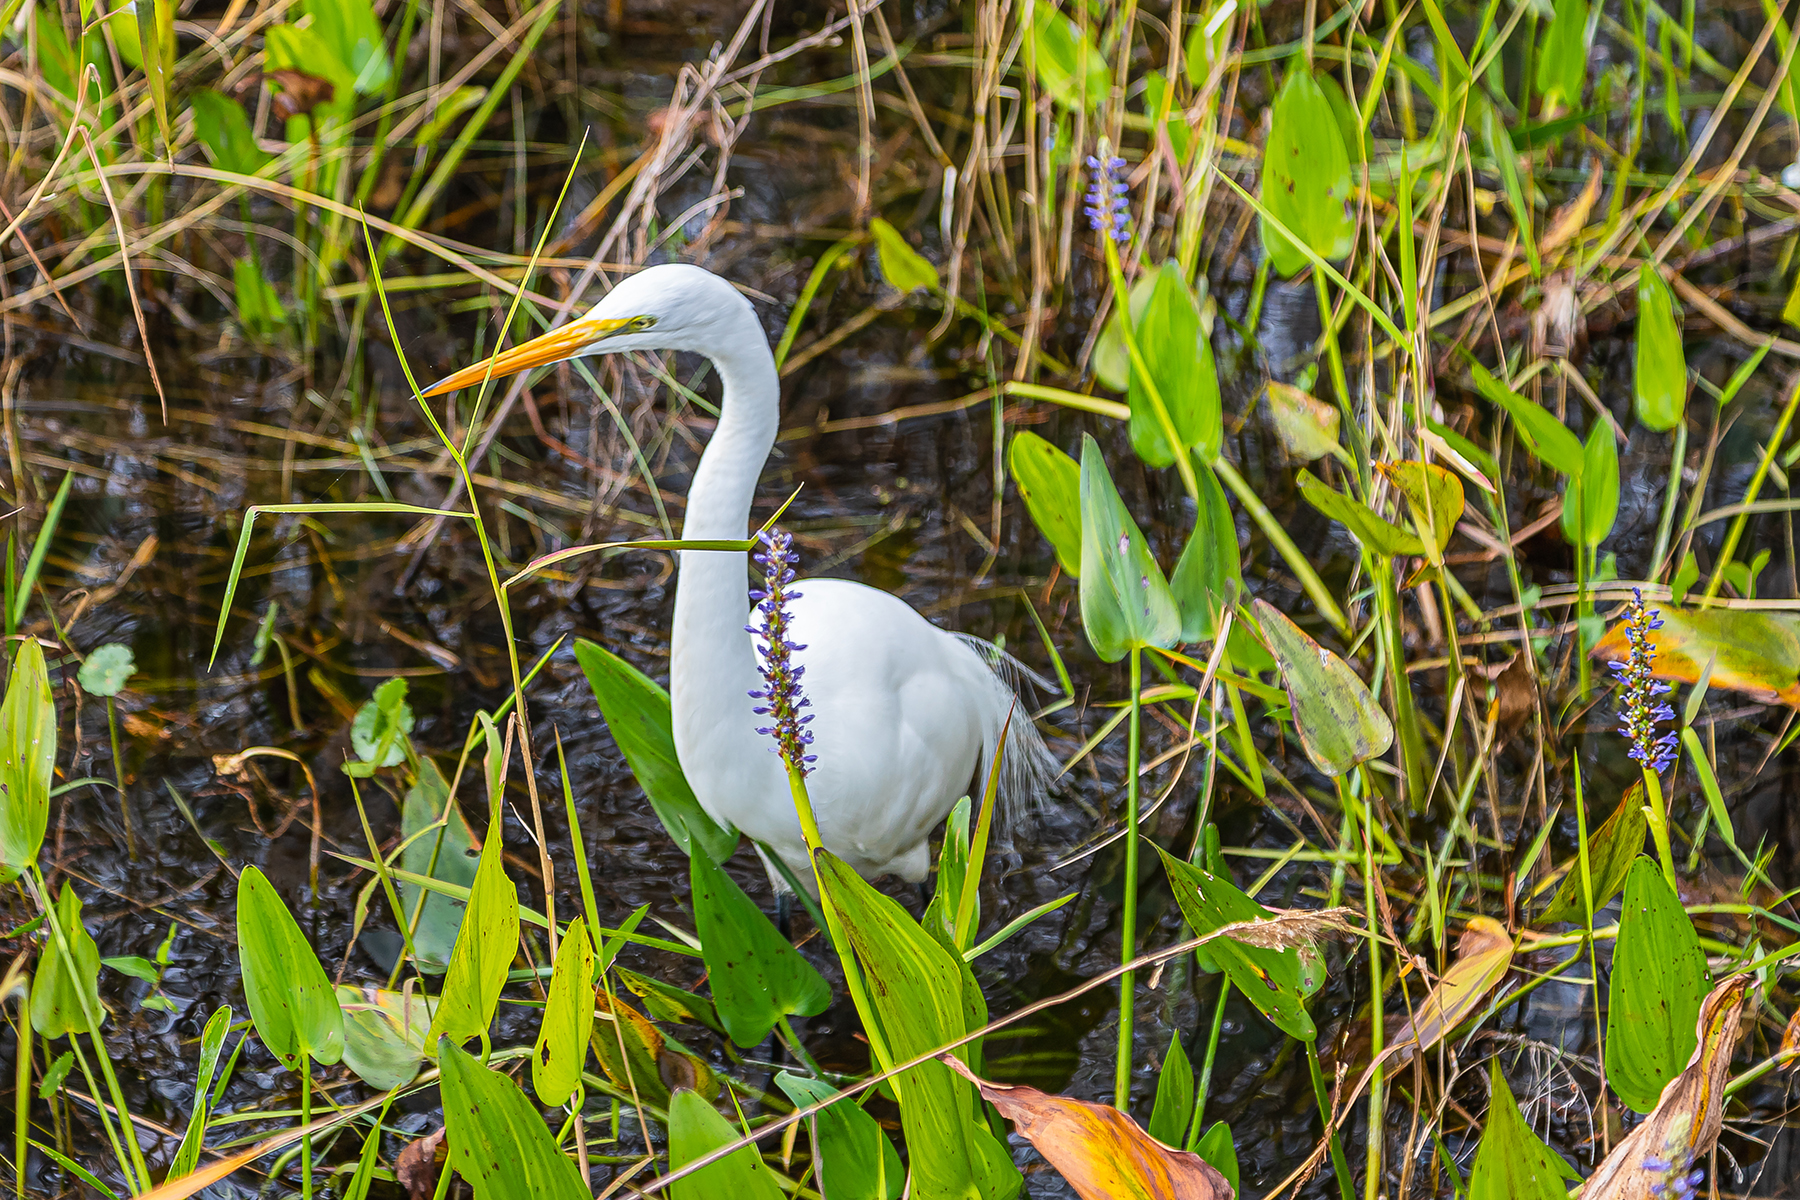 A white wading bird in greenery